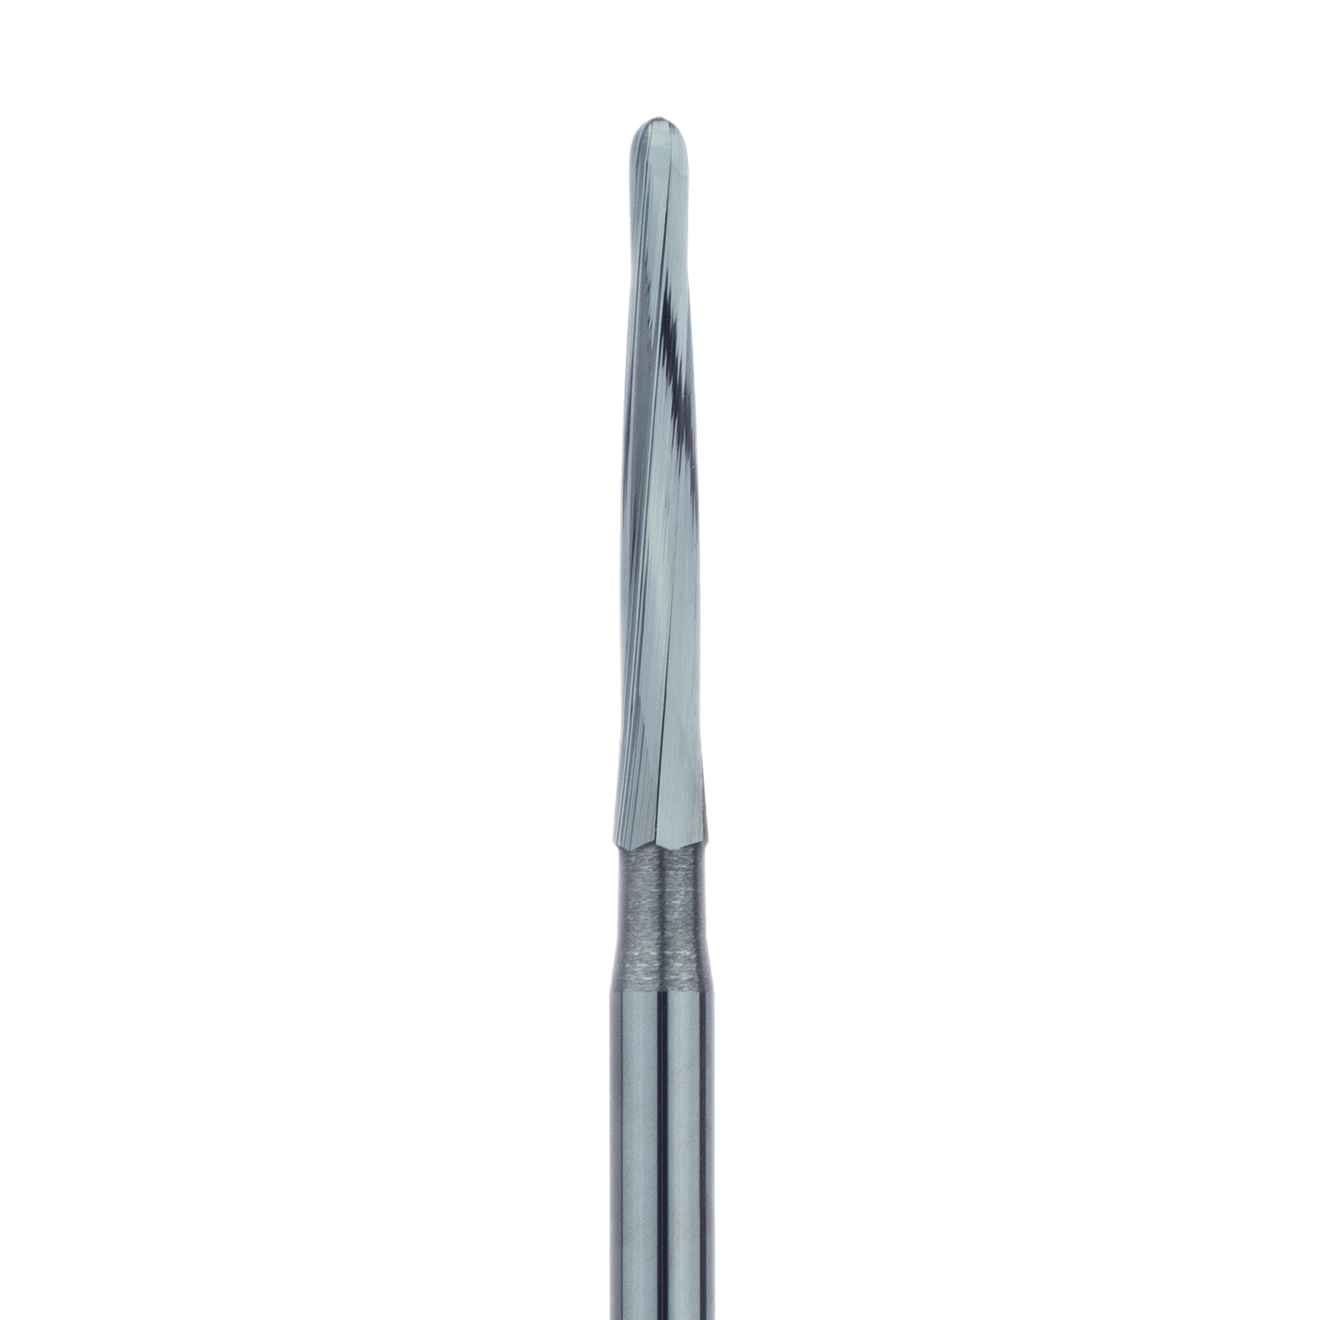 HM151-016-SU Surgical Lindemann Carbide Bur, Non-Cross Cut, 1.6mm Ø, SU